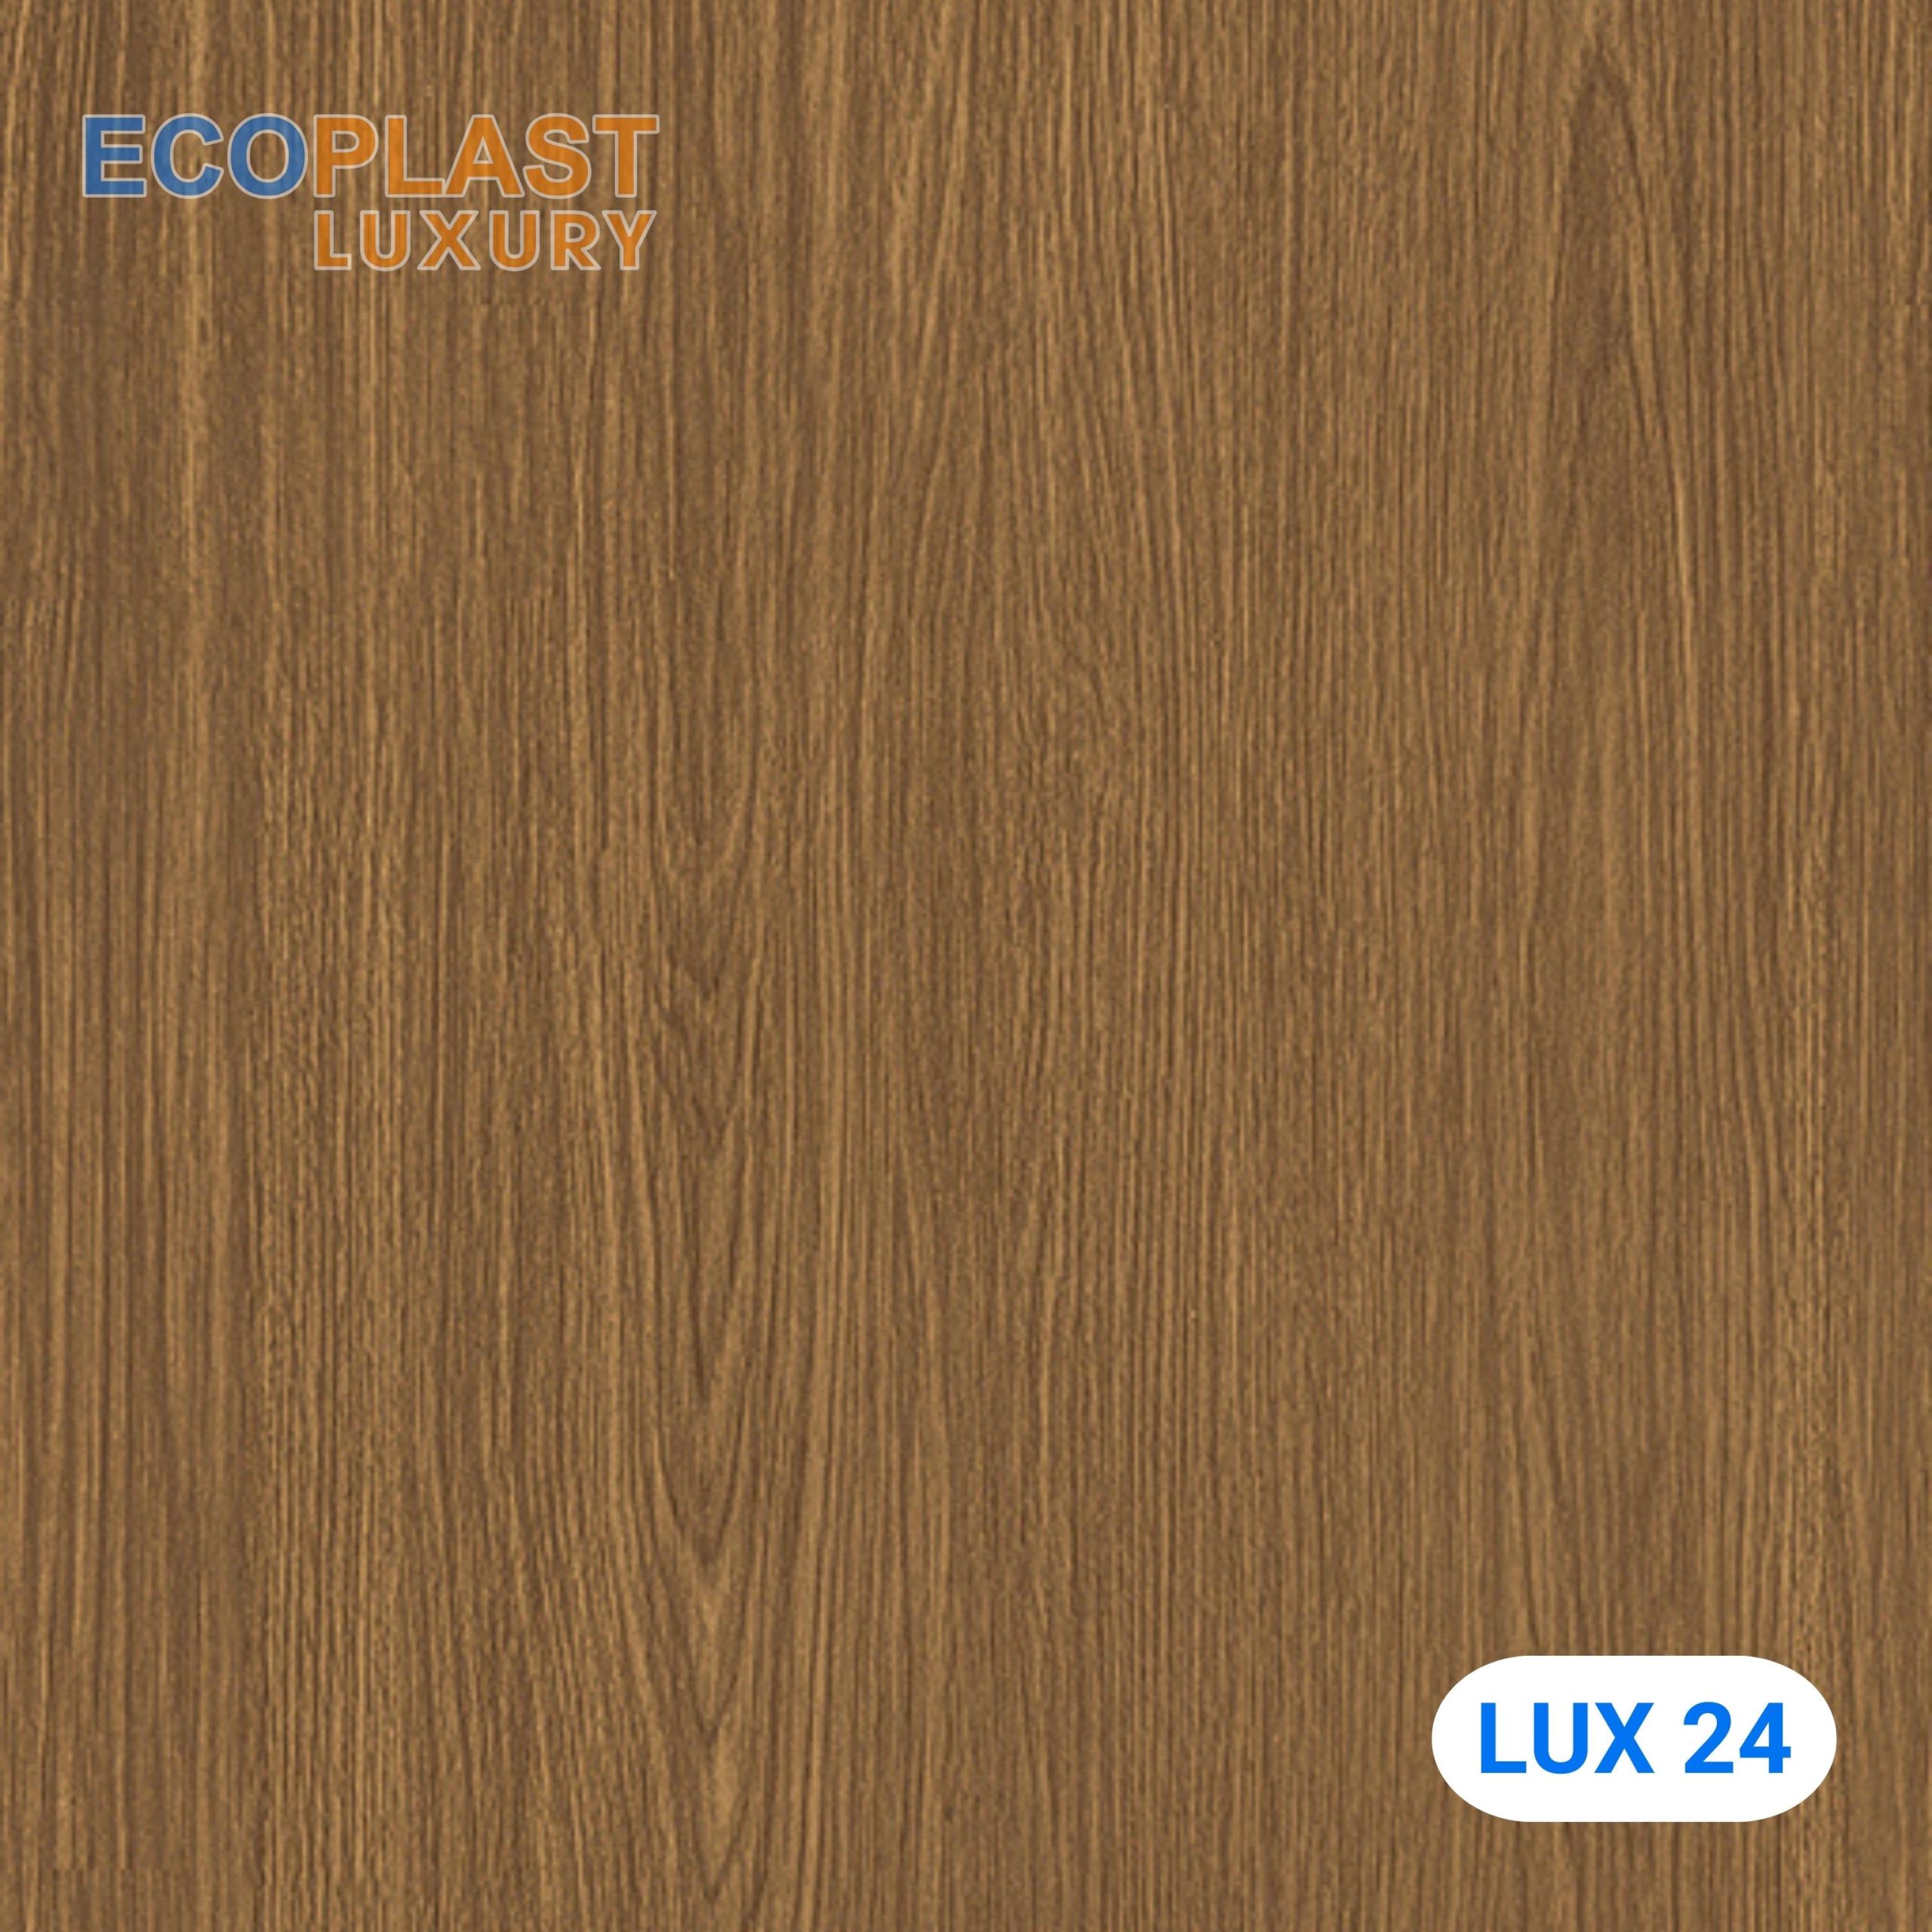 Mã màu tấm nhựa nội thất Ecoplast Lux 24